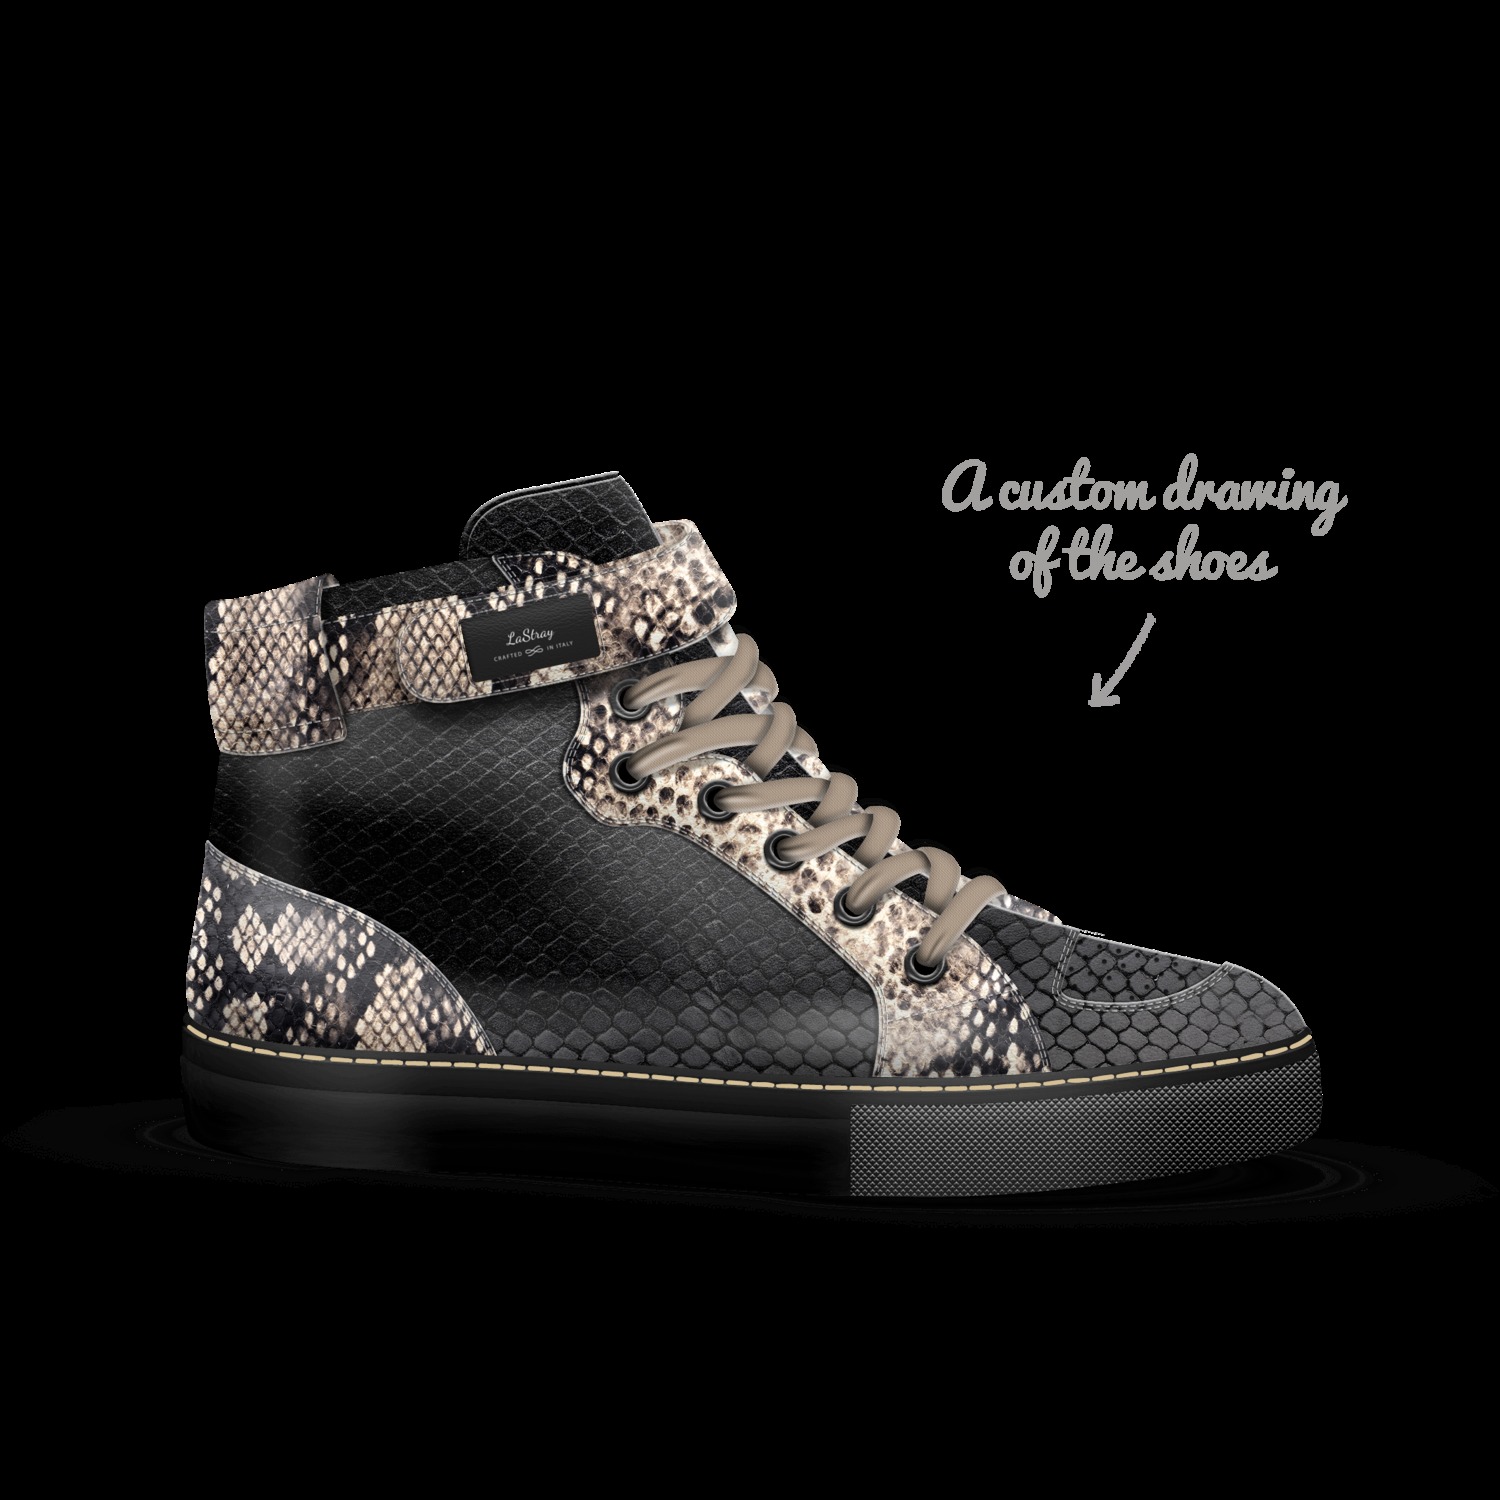 A Custom Shoe concept by Australia Downs